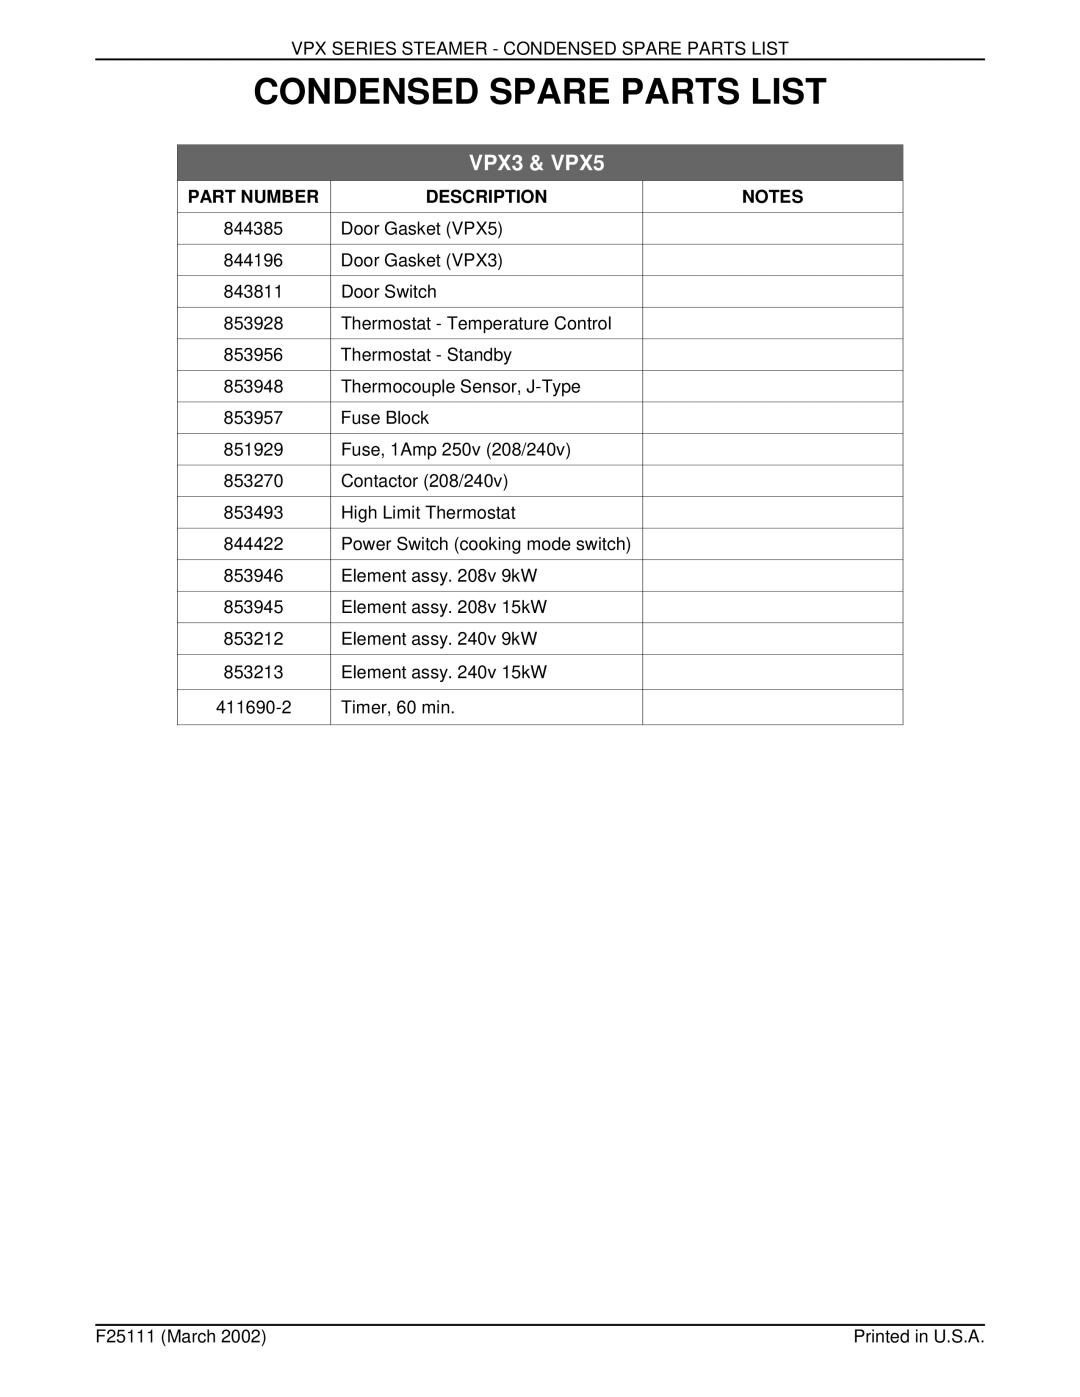 Vulcan-Hart VPX3 126586, VPX5 126588 manual Condensed Spare Parts List, VPX3 & VPX5 